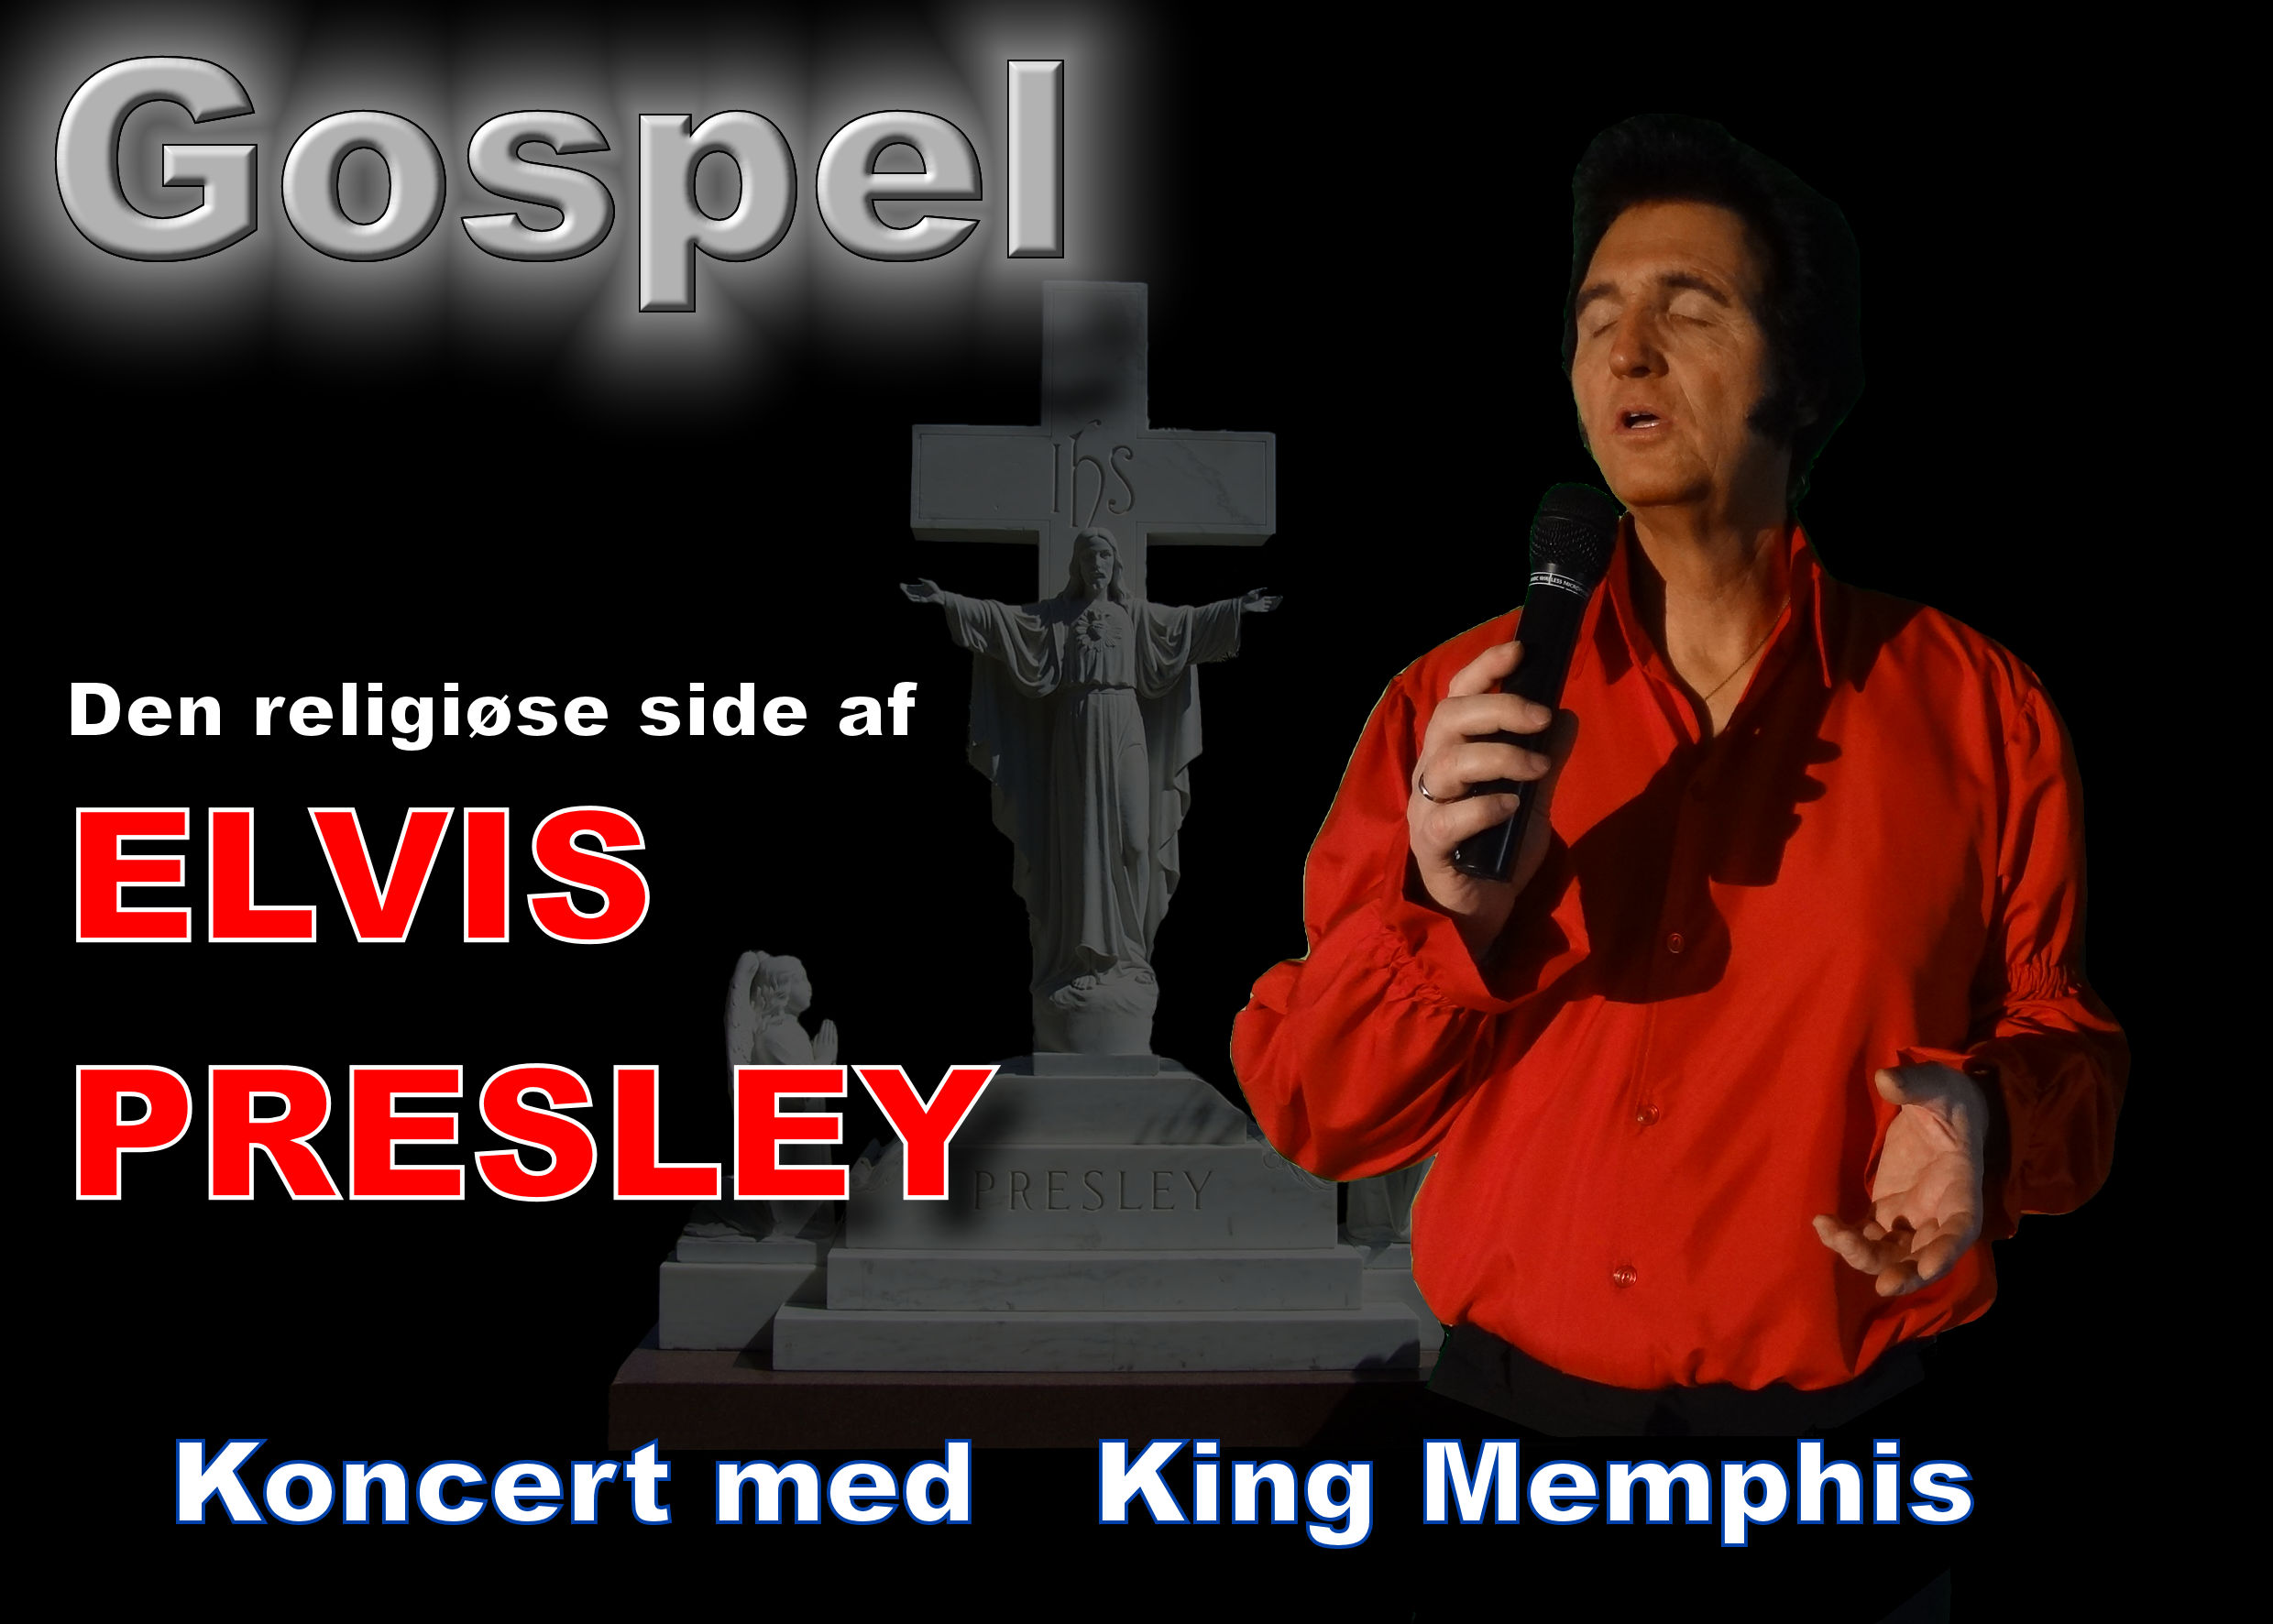 KING MEMPHIS in Gospel